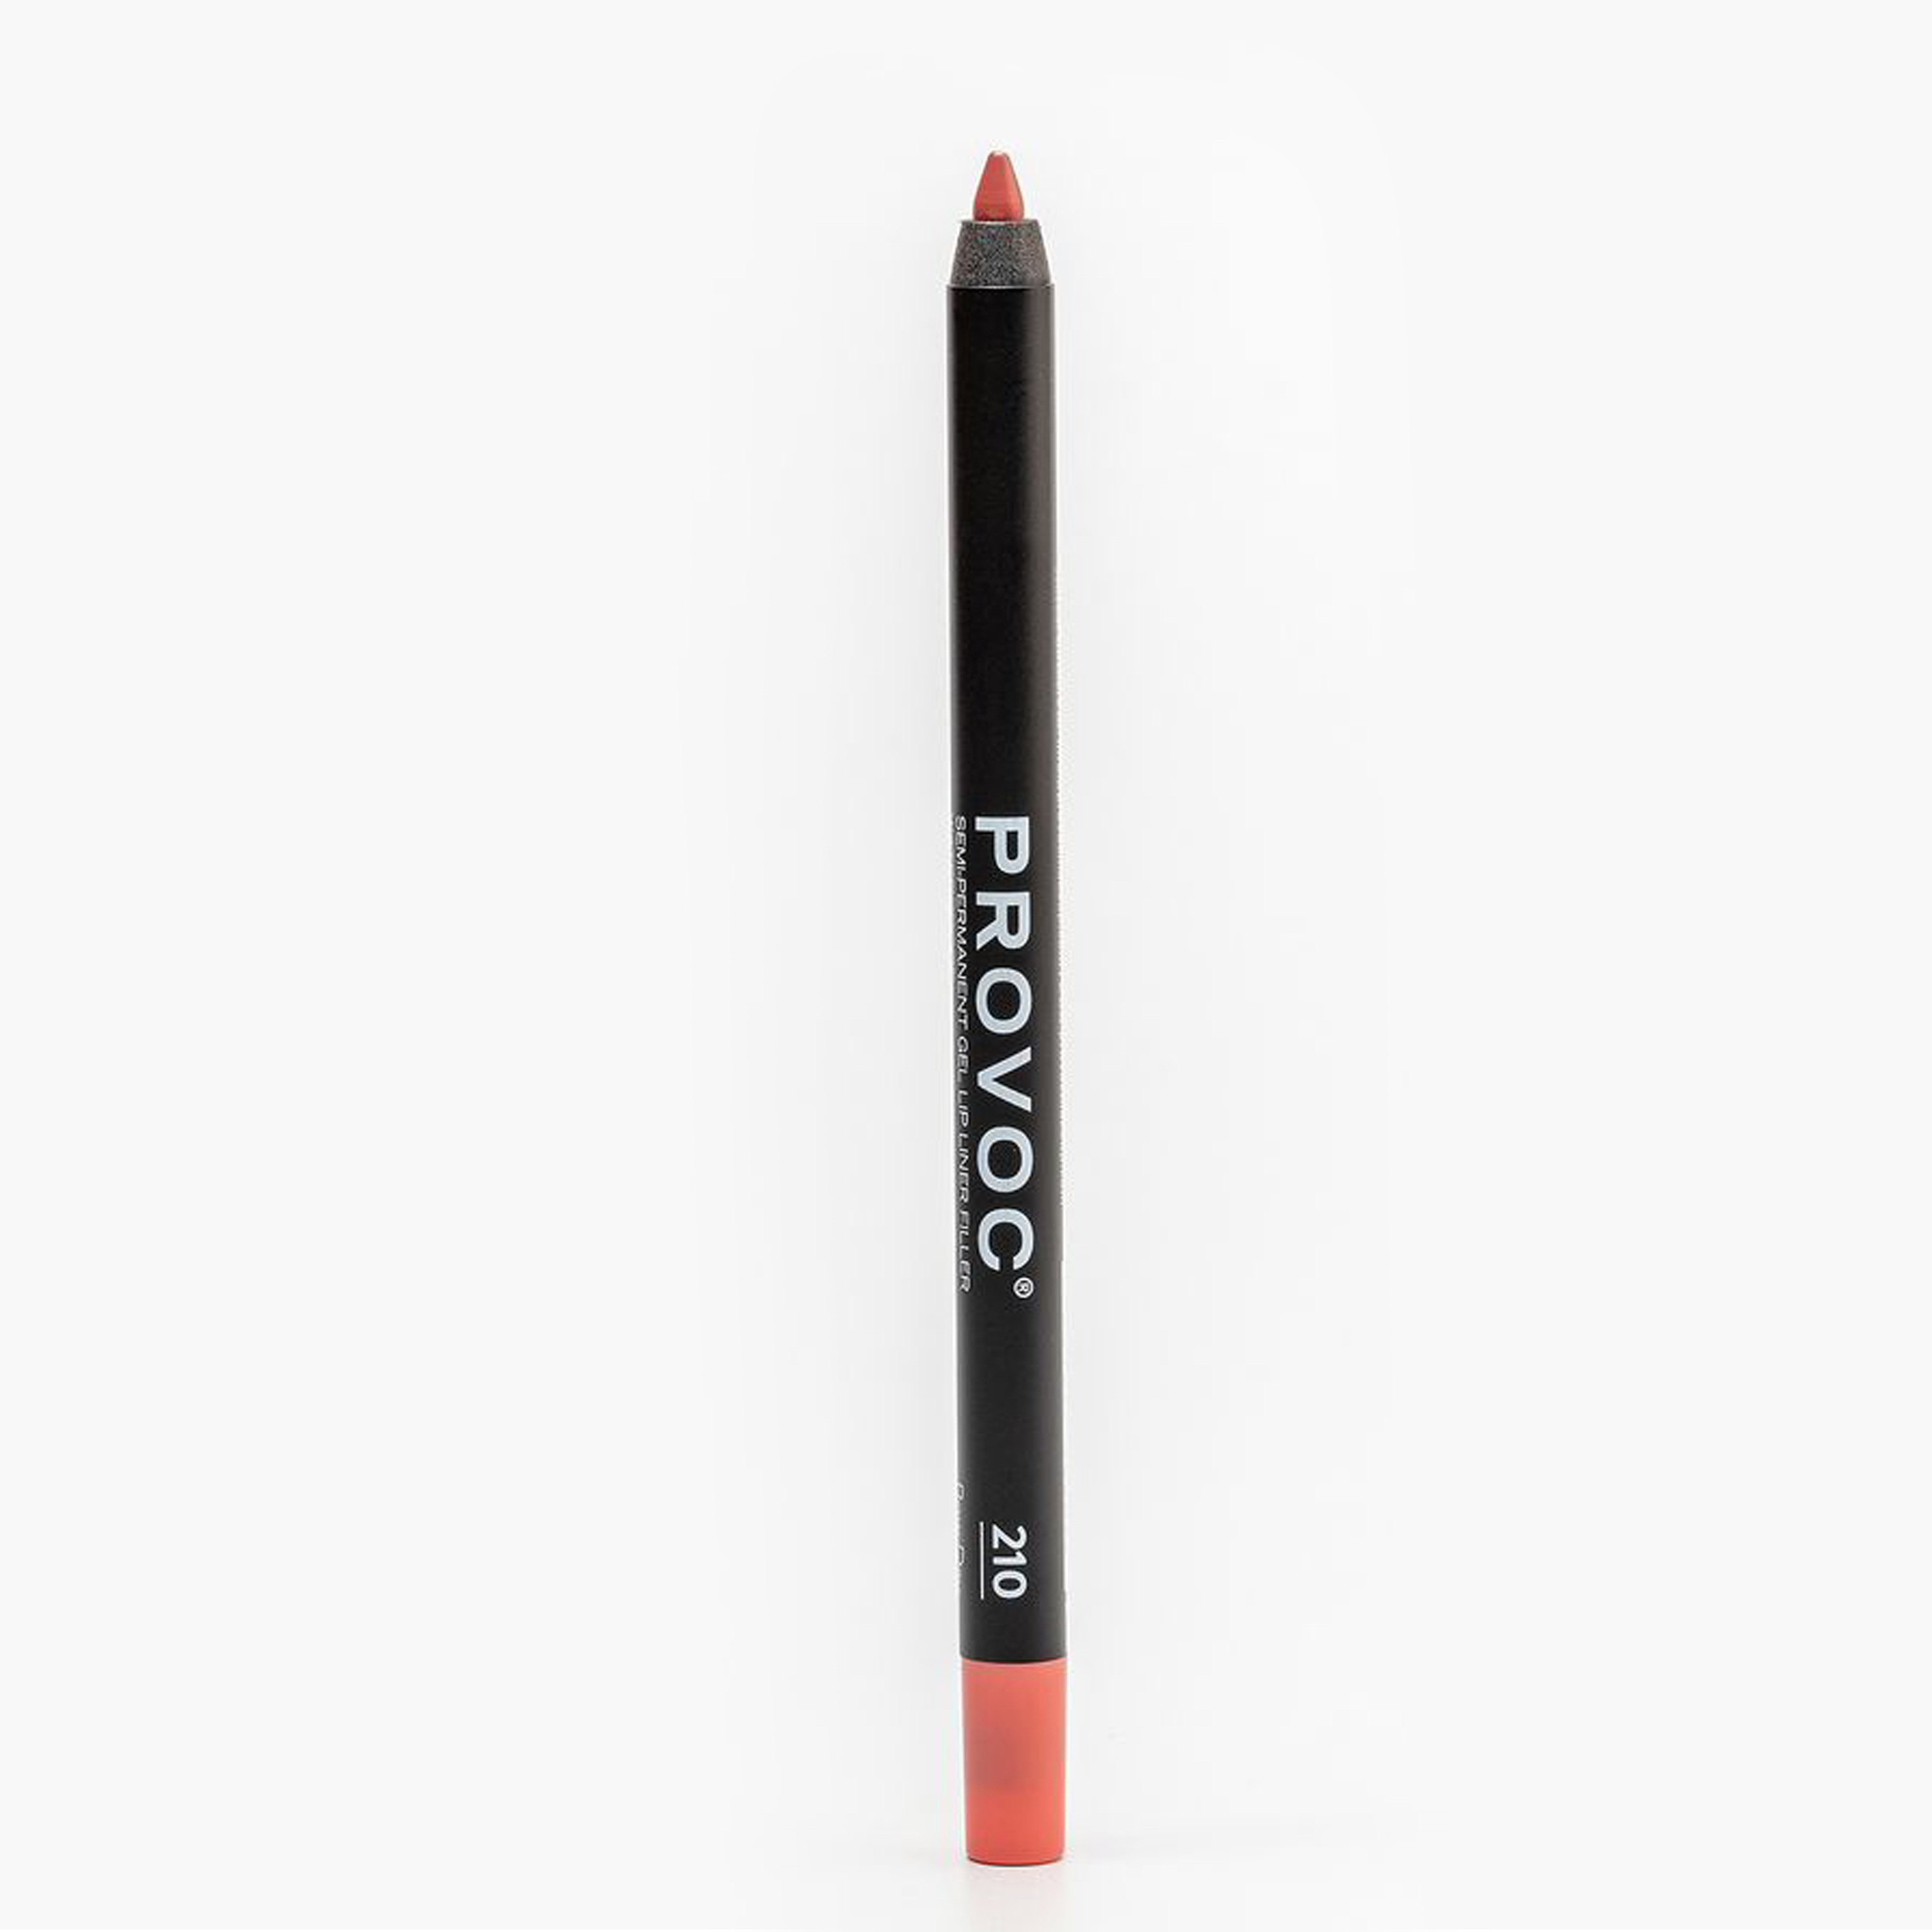 Карандаш для губ PROVOC Gel Lip Liner гелевый, №210 Bow Day бежево-лососевый, 1,2 г карандаш для губ provoc gel lip liner гелевый 18 irresistible натурально розовый 1 2 г